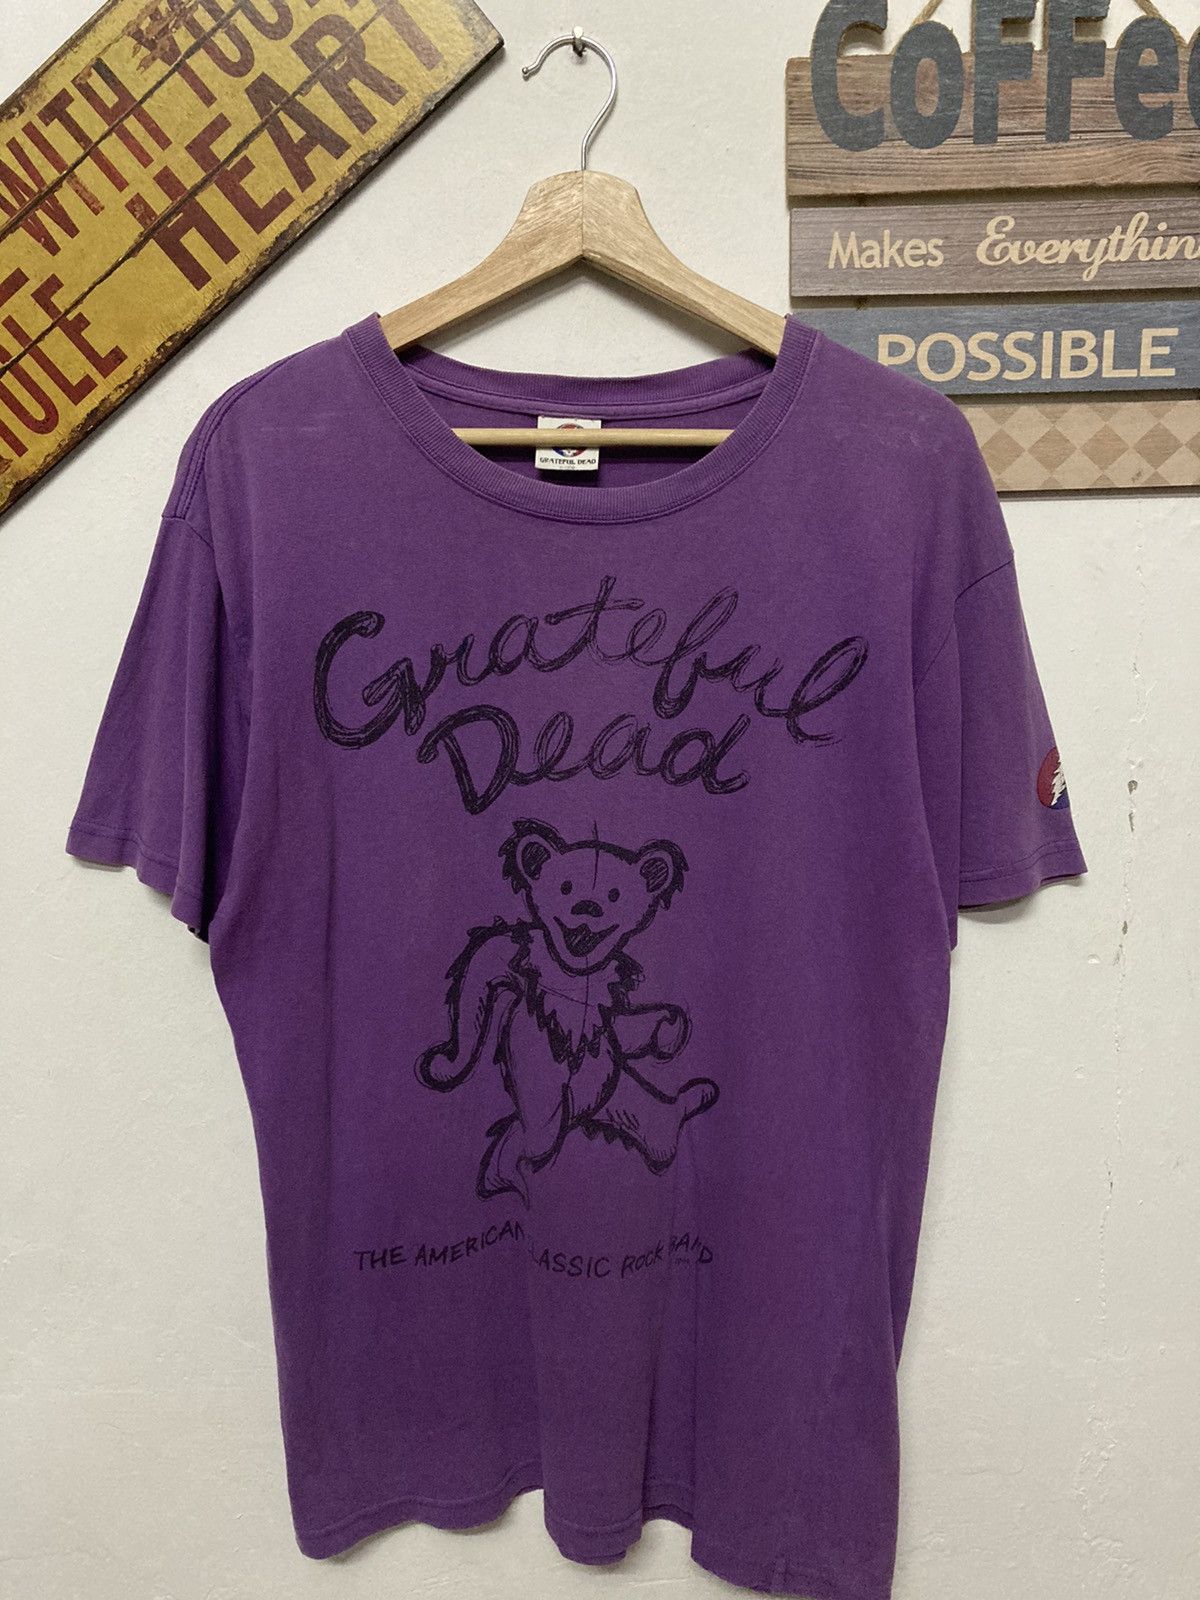 Vintage Grateful Dead 2005 T shirt - 1